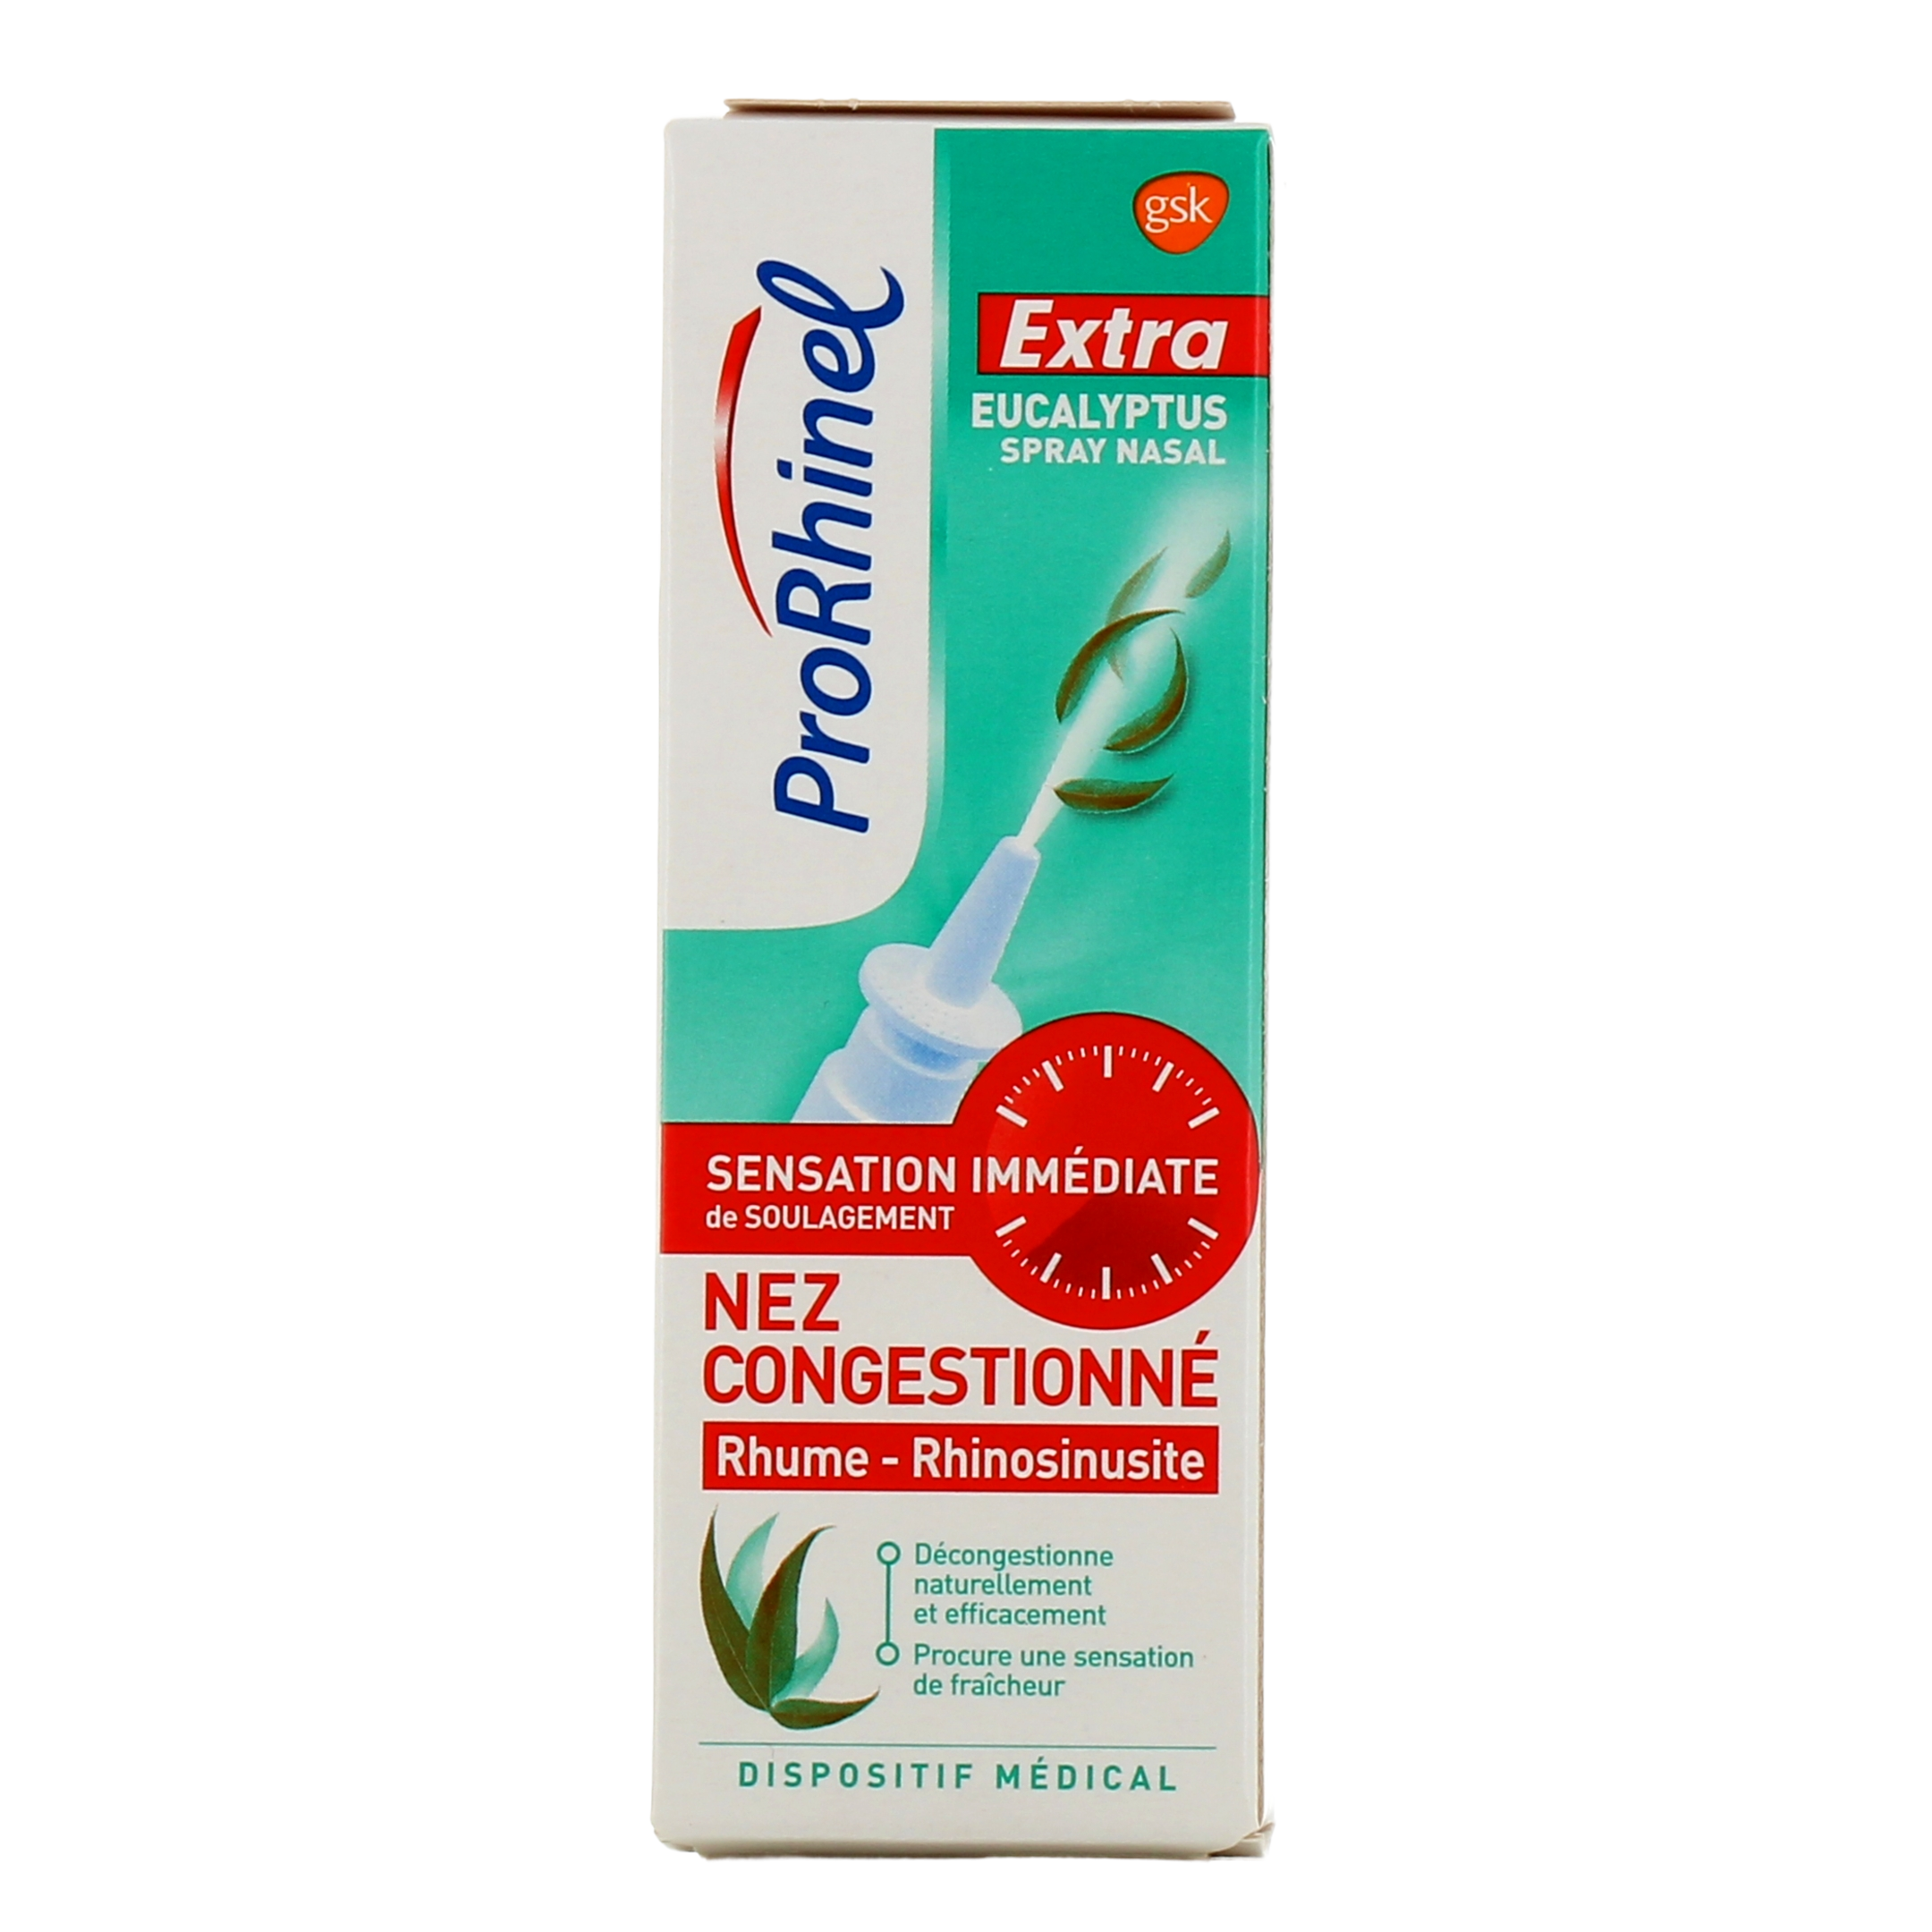 PRORHINEL Extra Eucalyptus Spray Nasal 20 ml